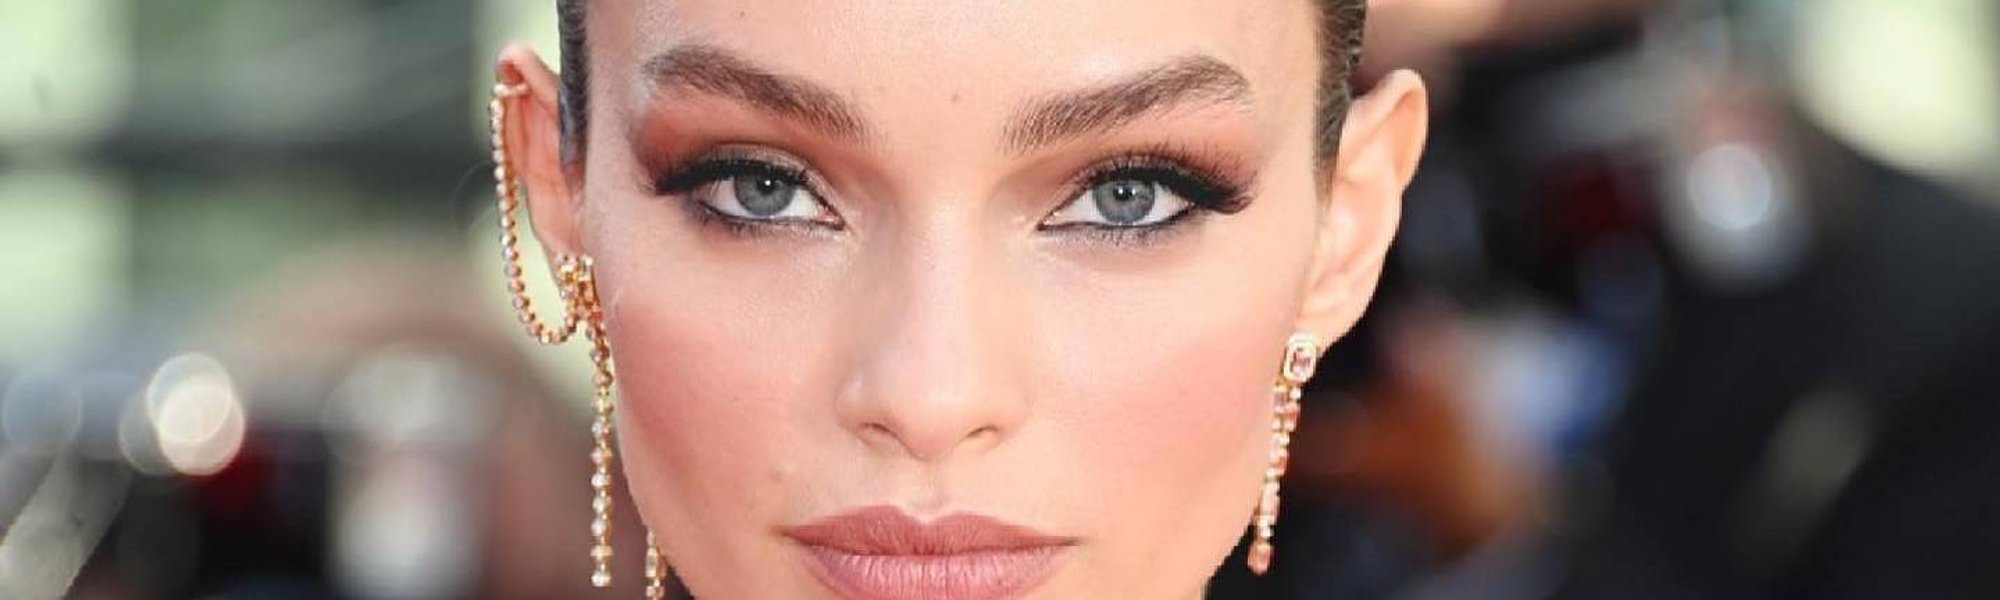 Maquillaje ‘Siren eyes’ paso a paso | L’Oréal Paris 